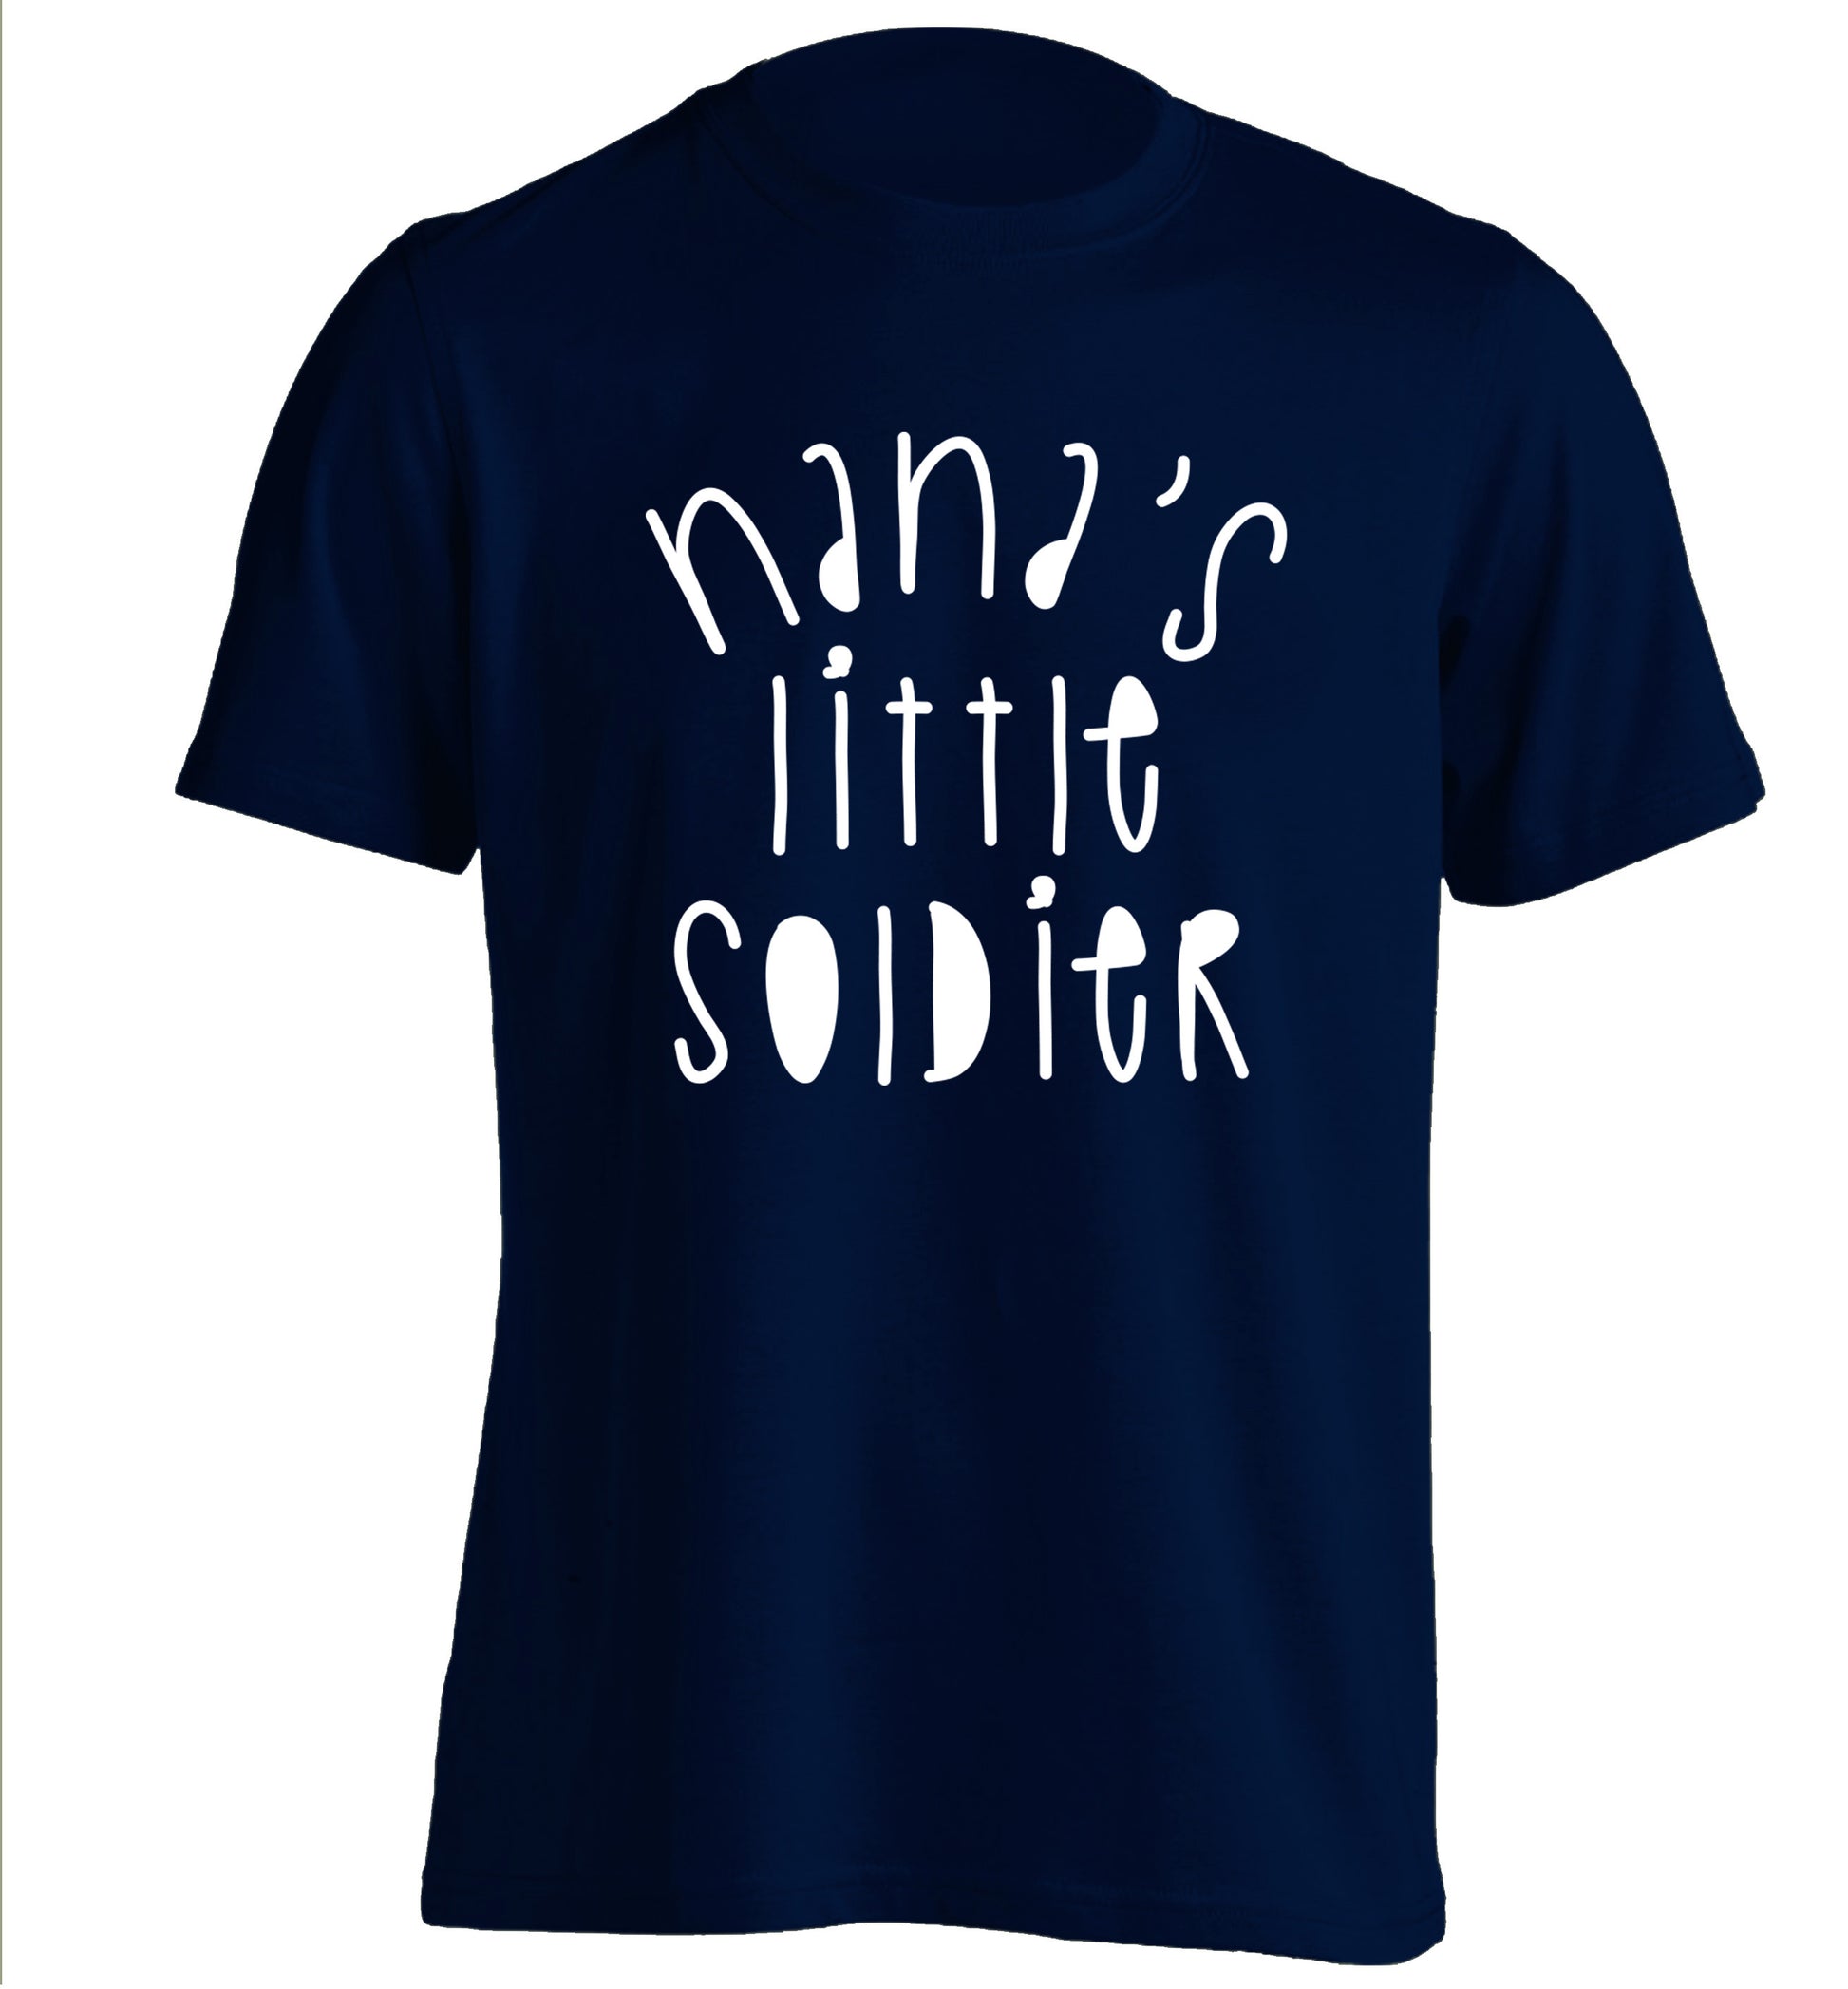 Nana's little soldier adults unisex navy Tshirt 2XL